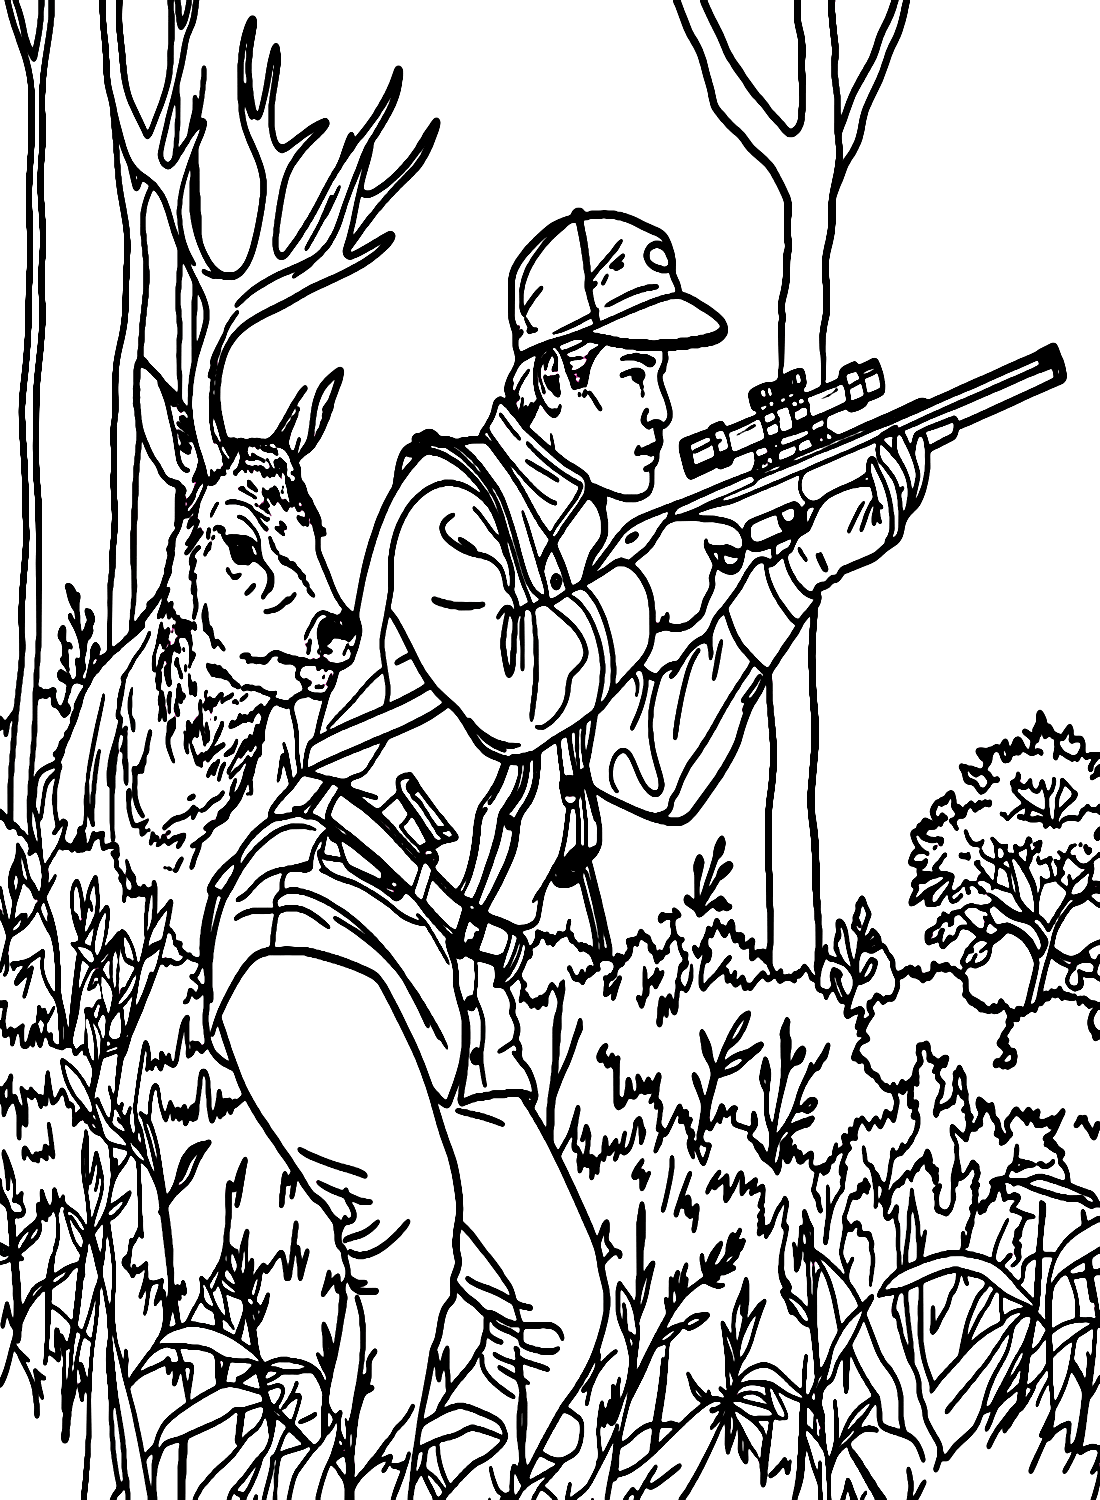 Man holding Gun Hunting Deer from Hunting